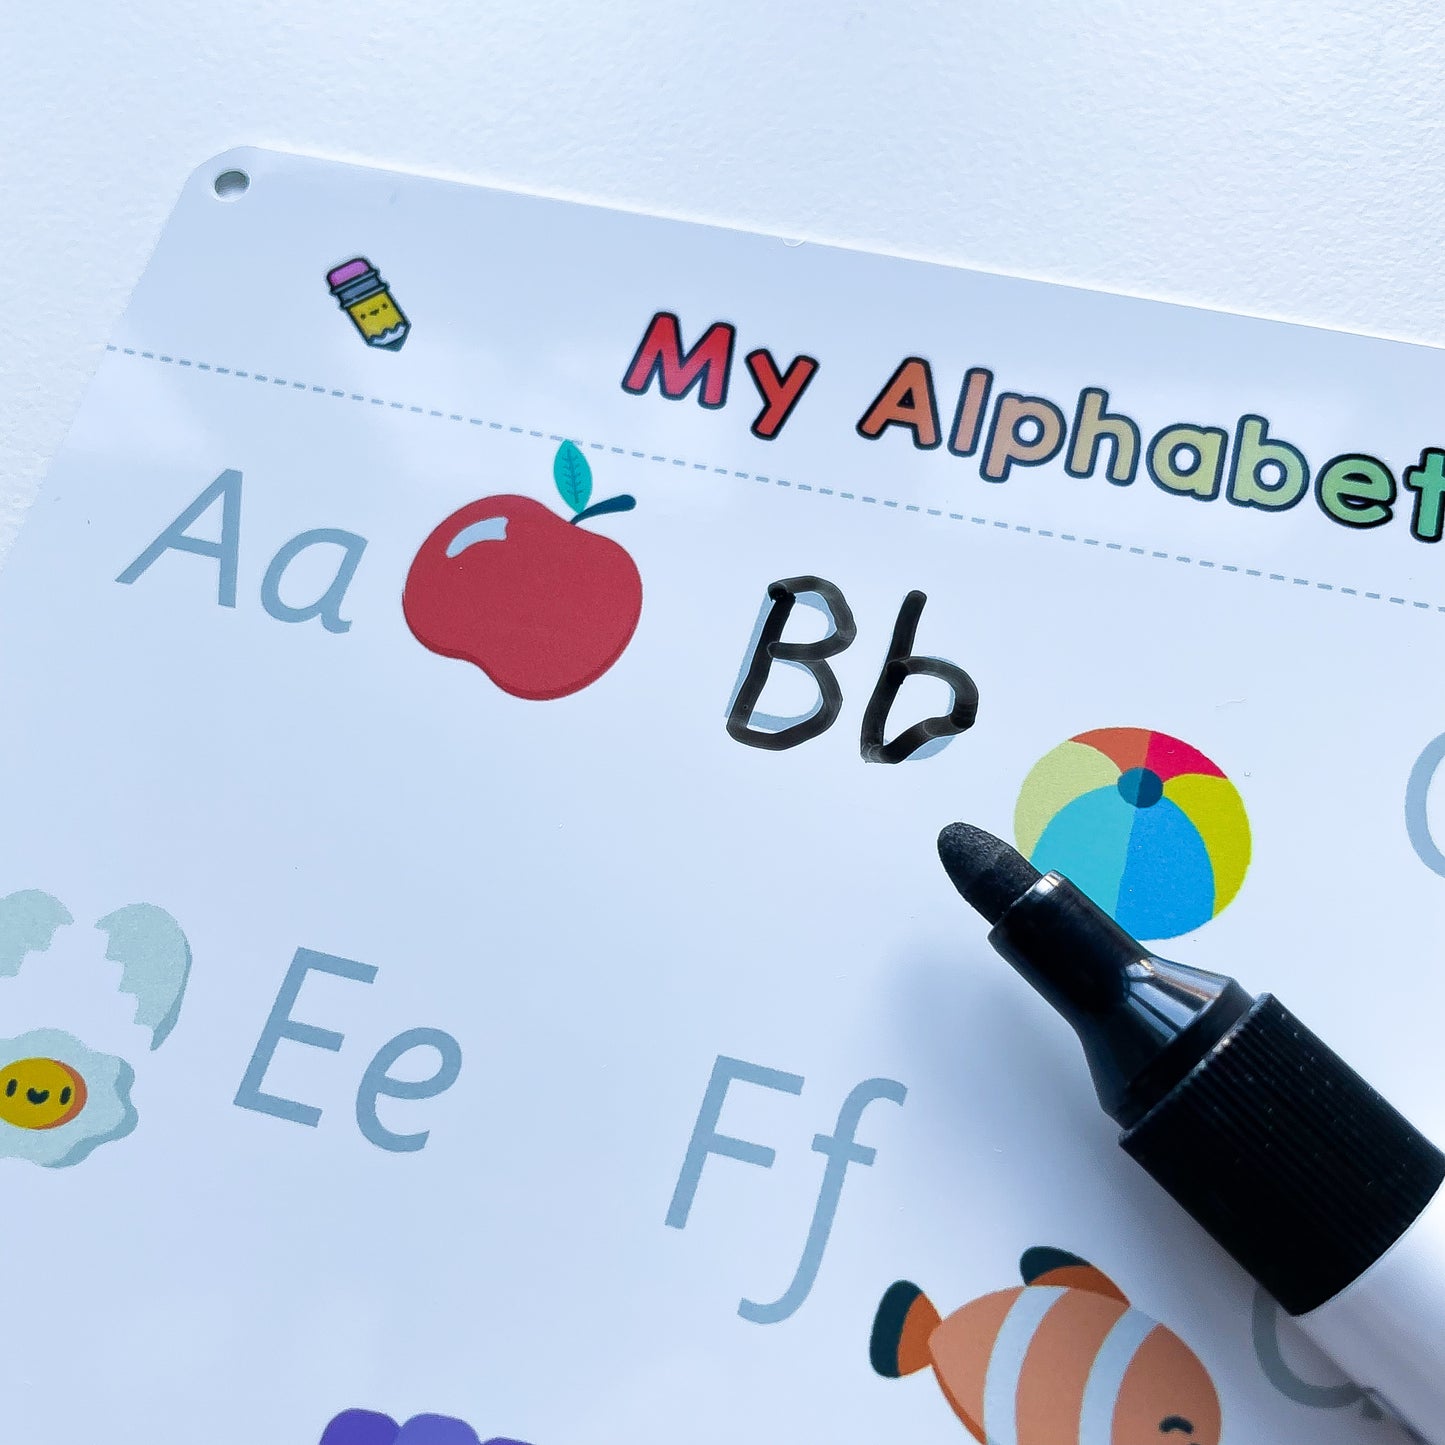 Illustrated Alphabet Practise Whiteboard